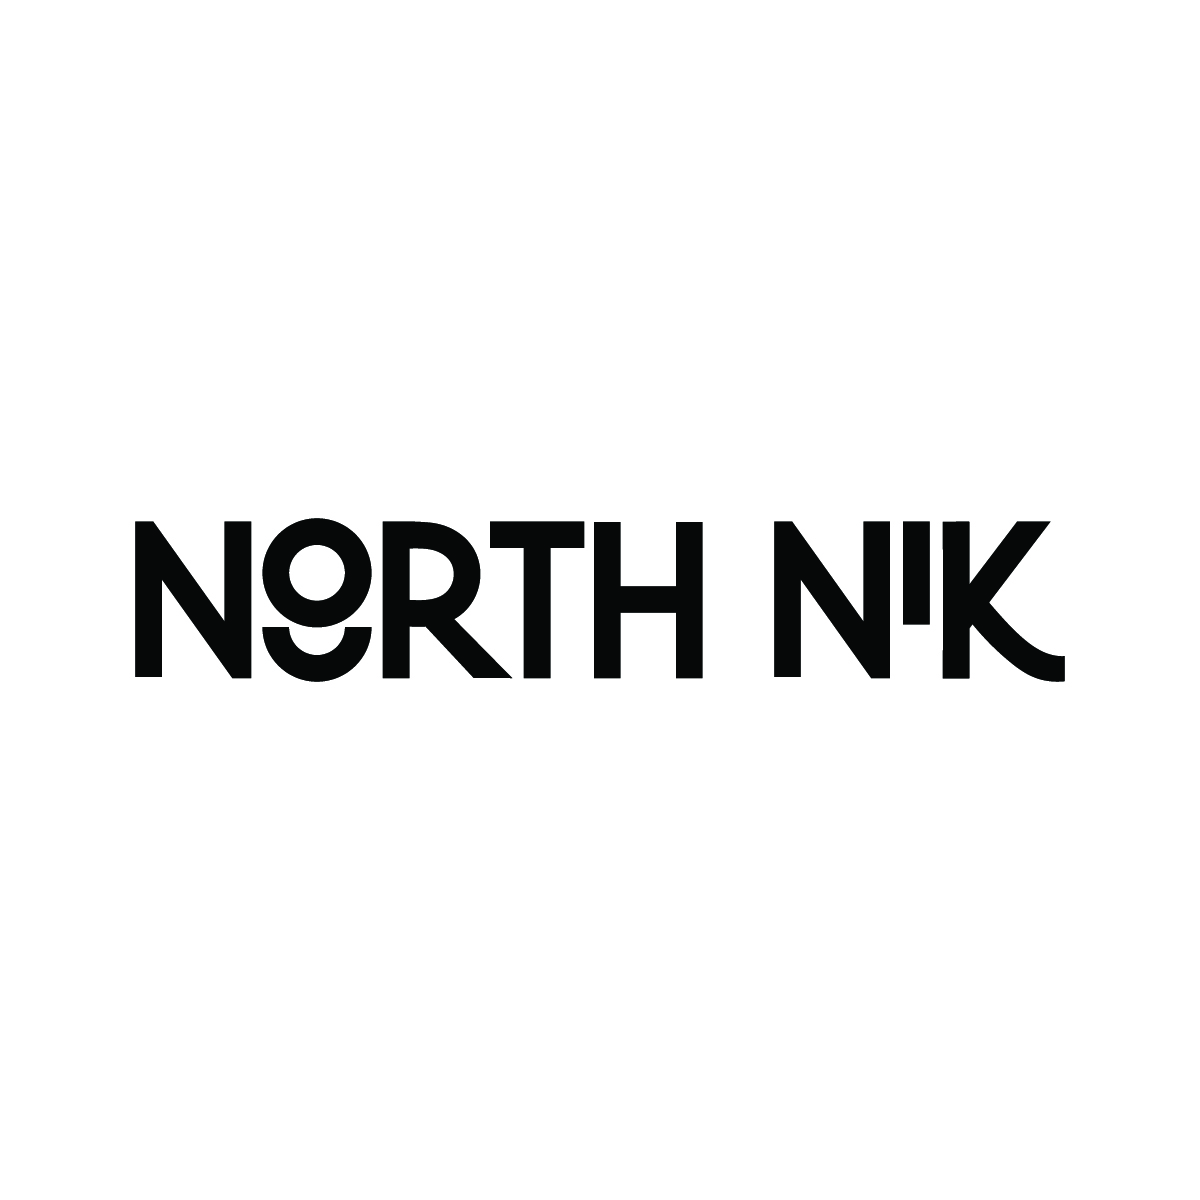 North Nik.jpg